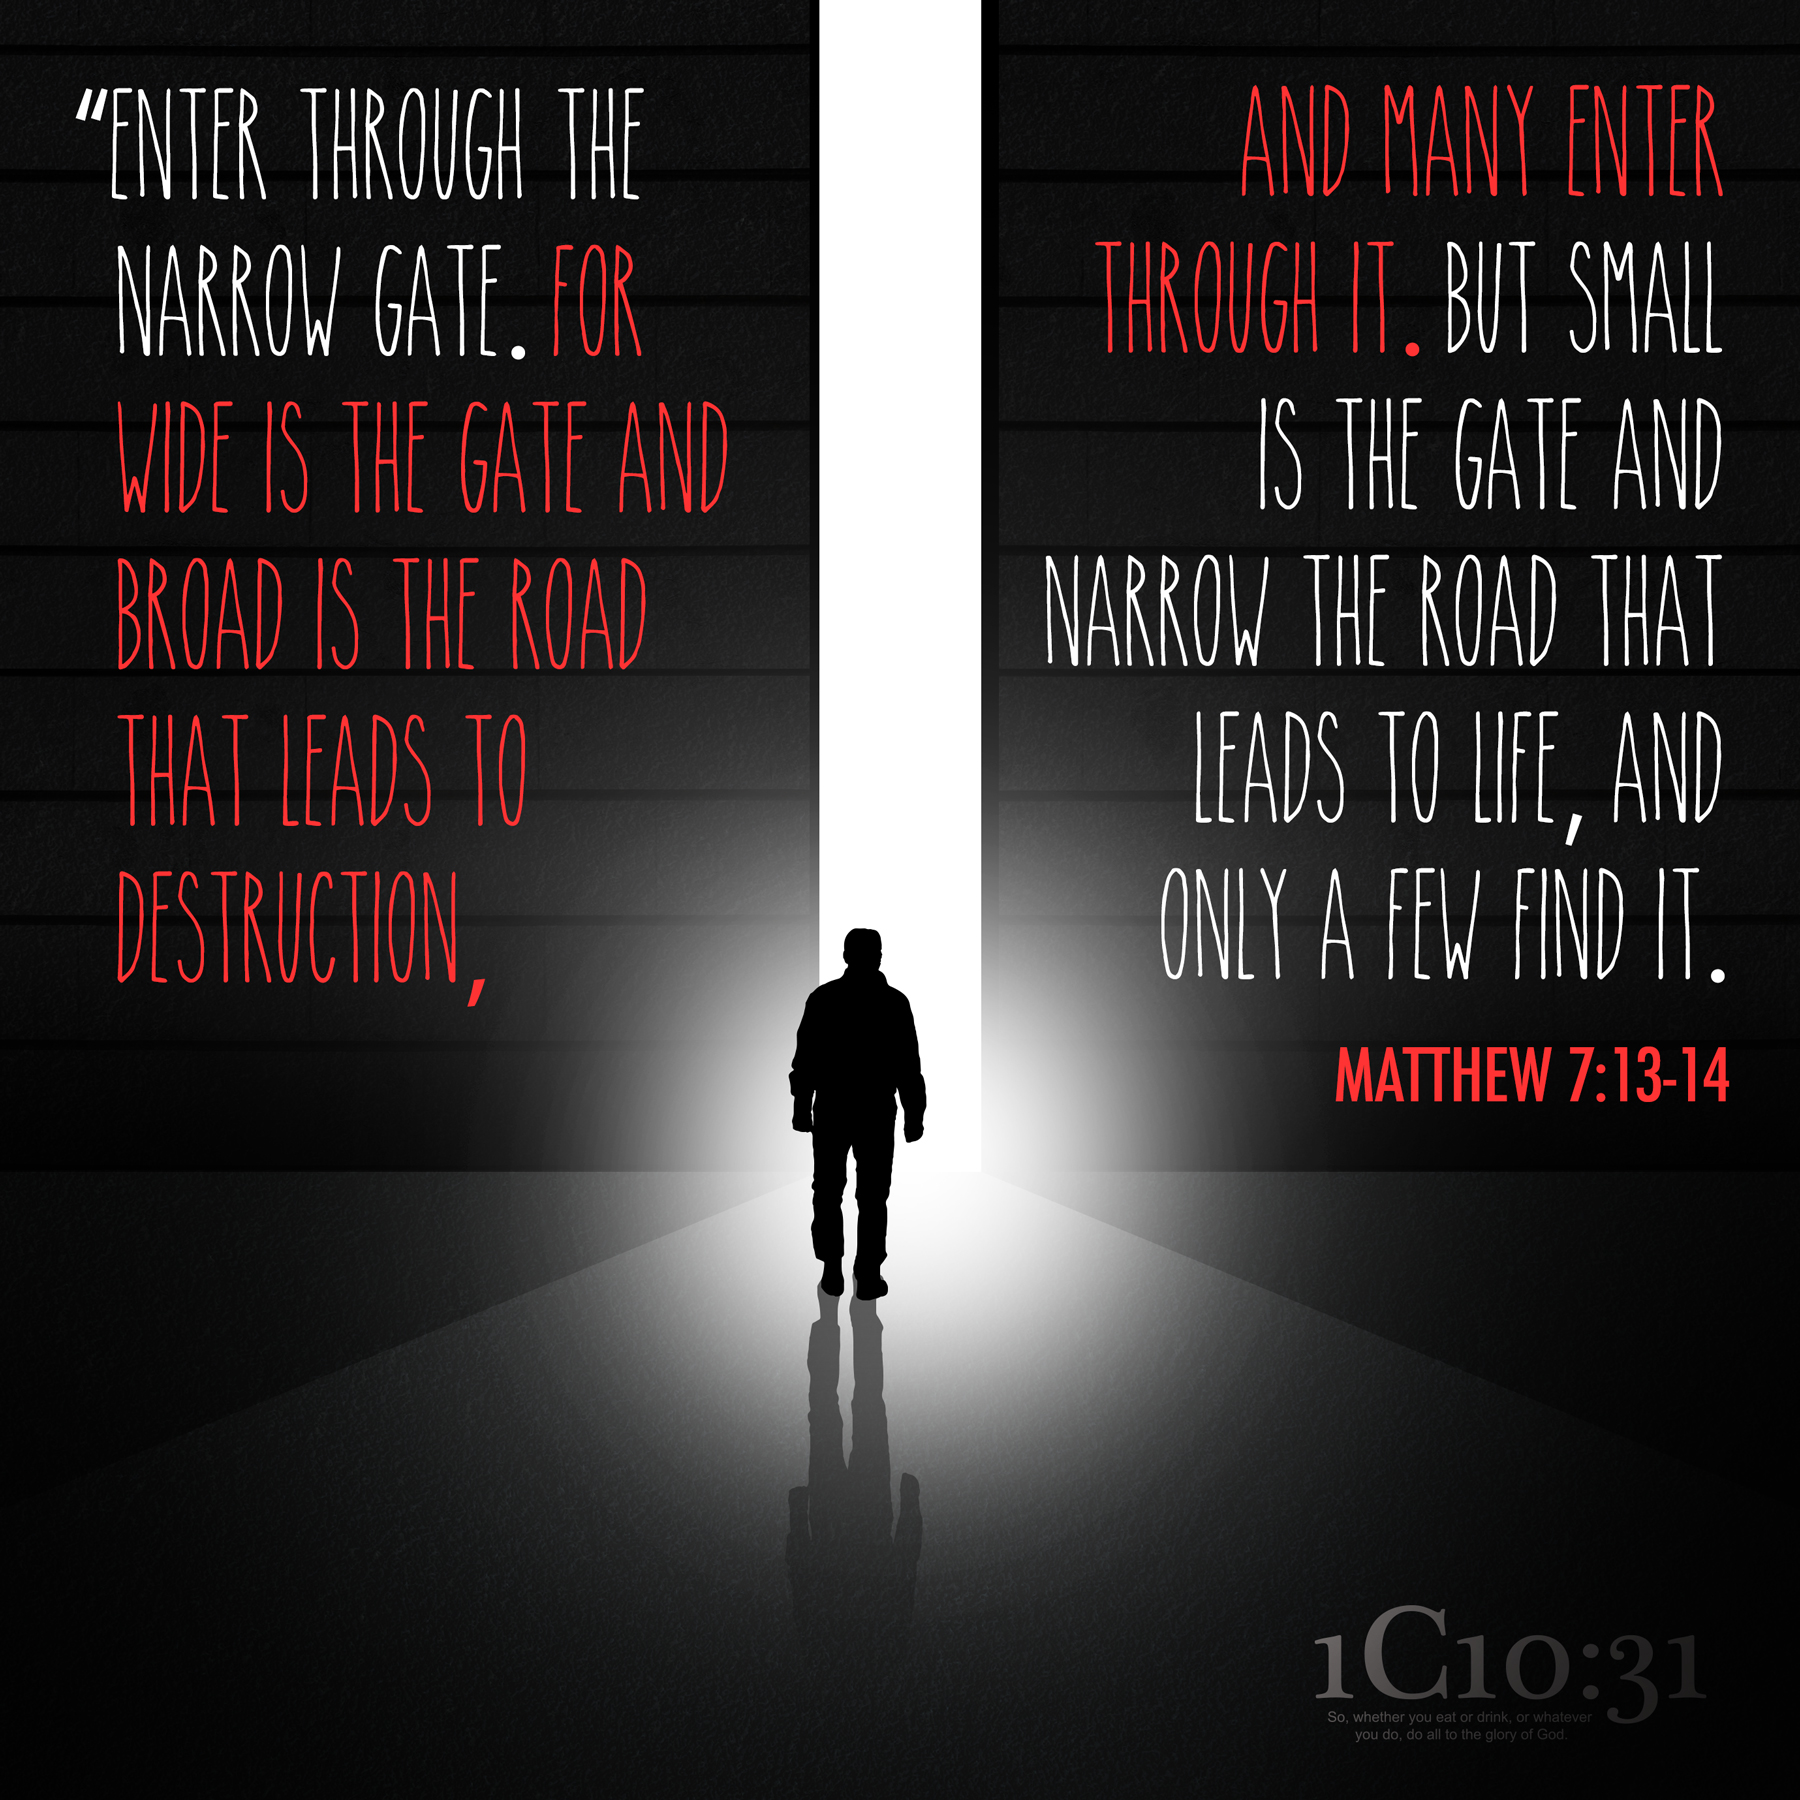 Matthew 7:13-14